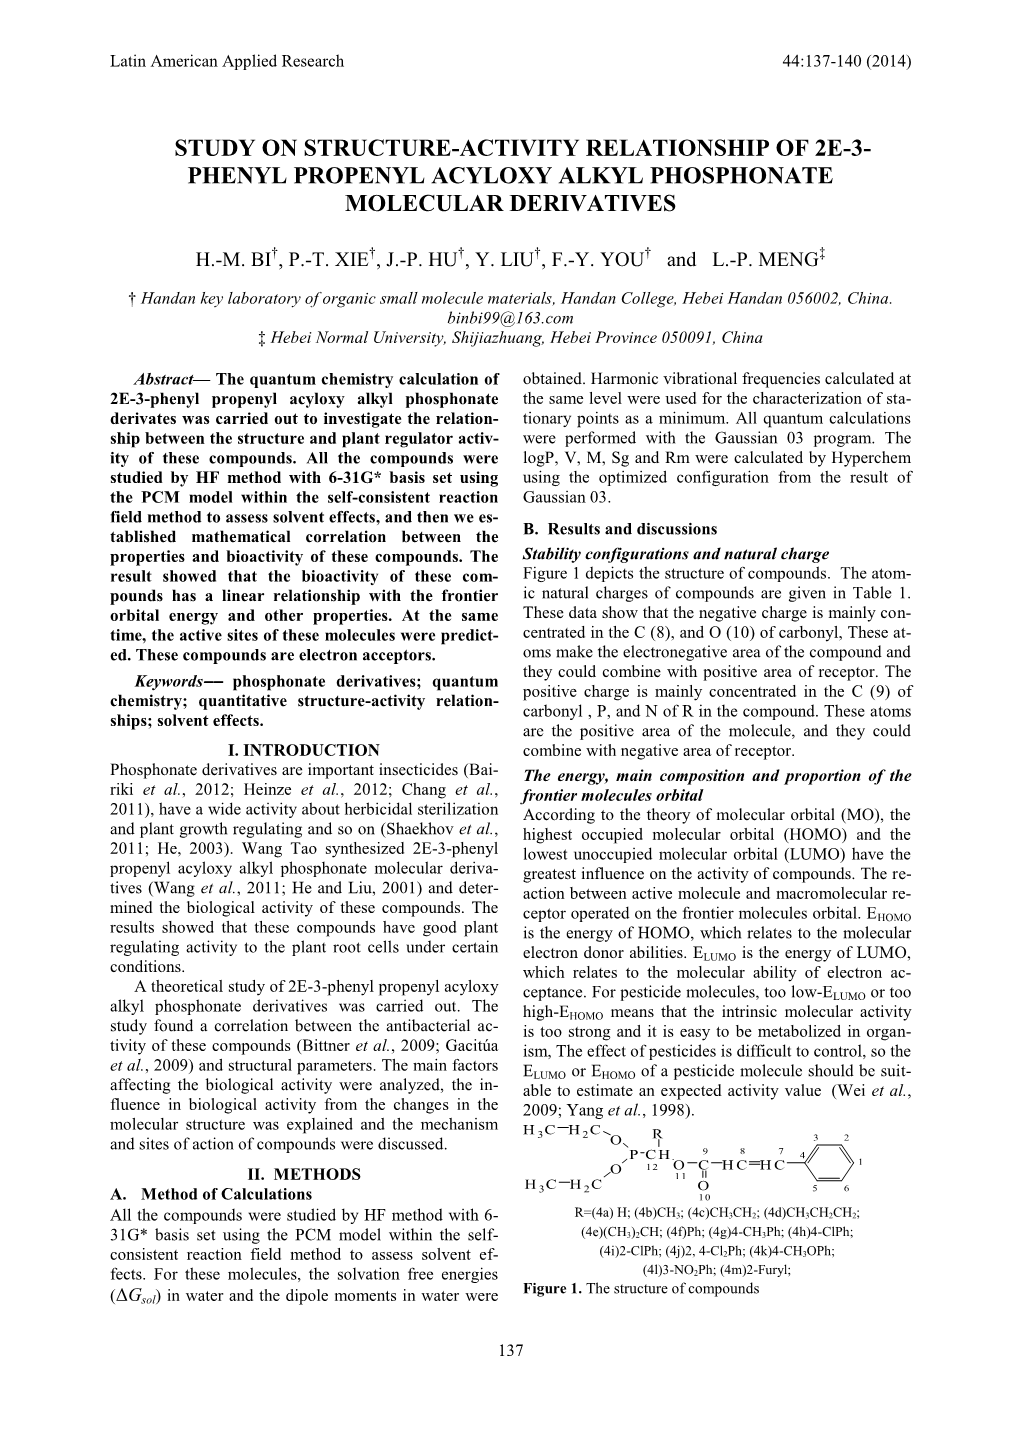 Phenyl Propenyl Acyloxy Alkyl Phosphonate Molecular Derivatives